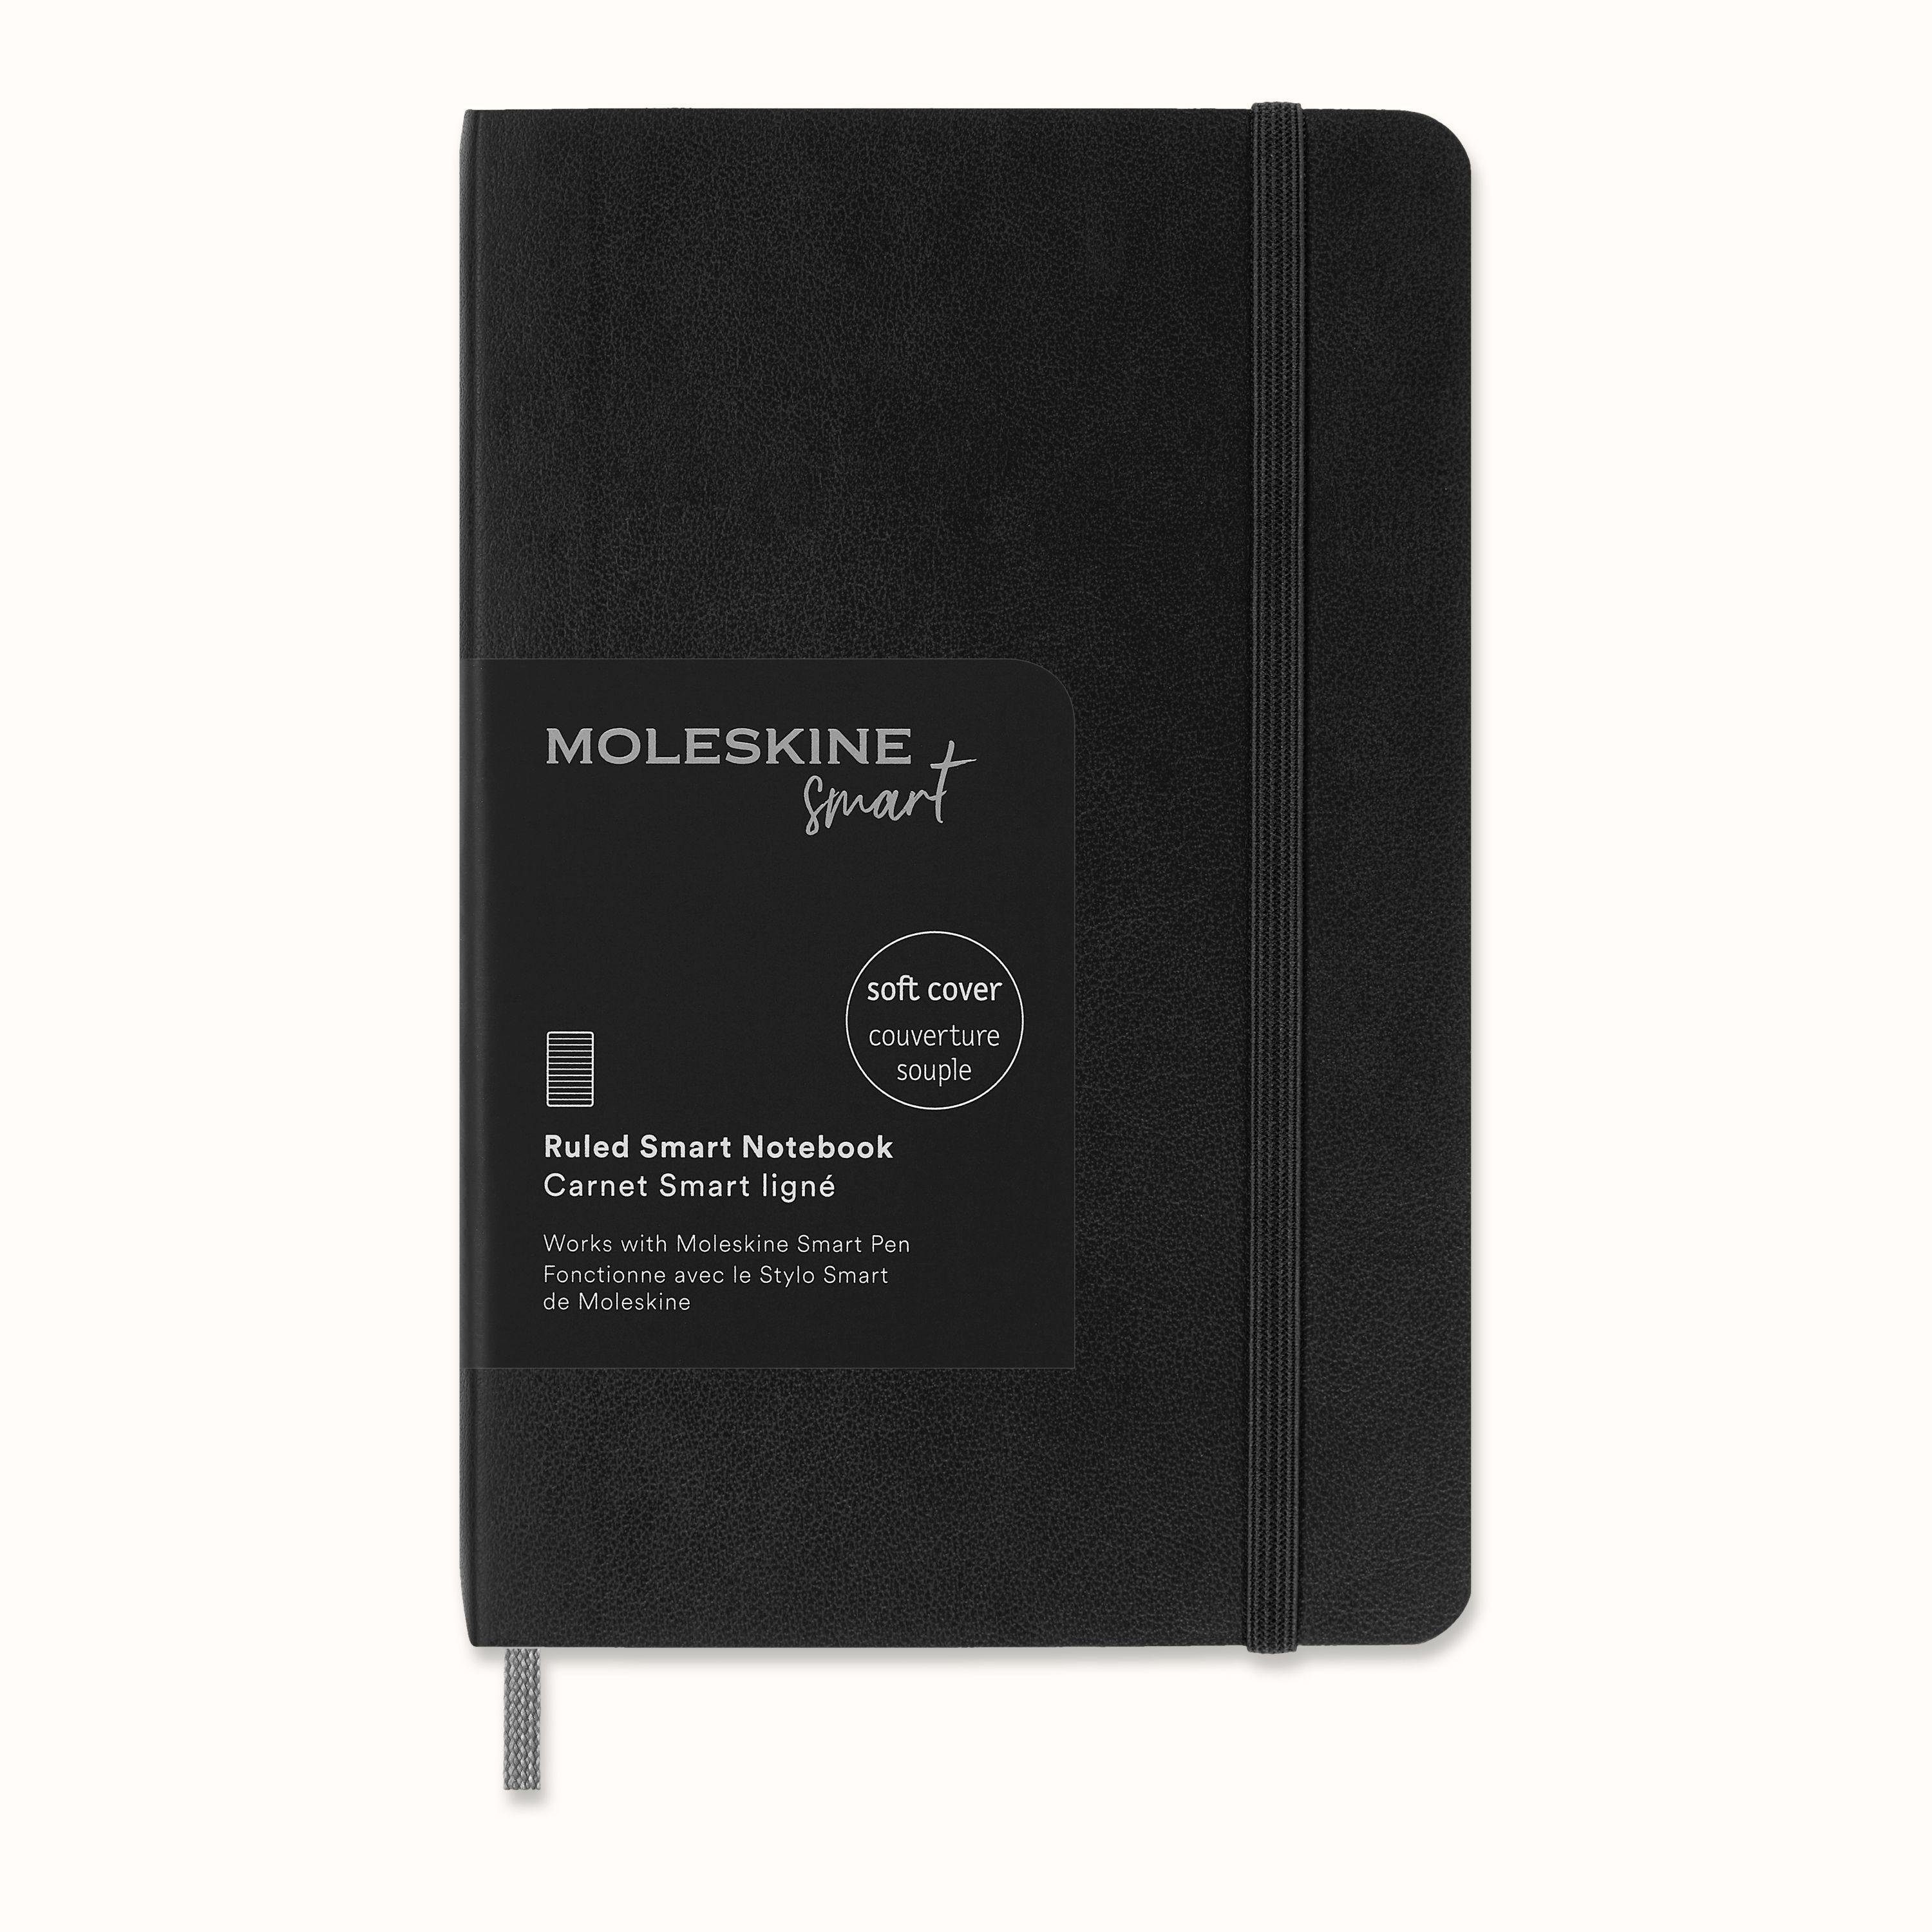 Notizbuch Pocket/A6, Smart Moleskine Notizbücher, Schwarz MOLESKINE